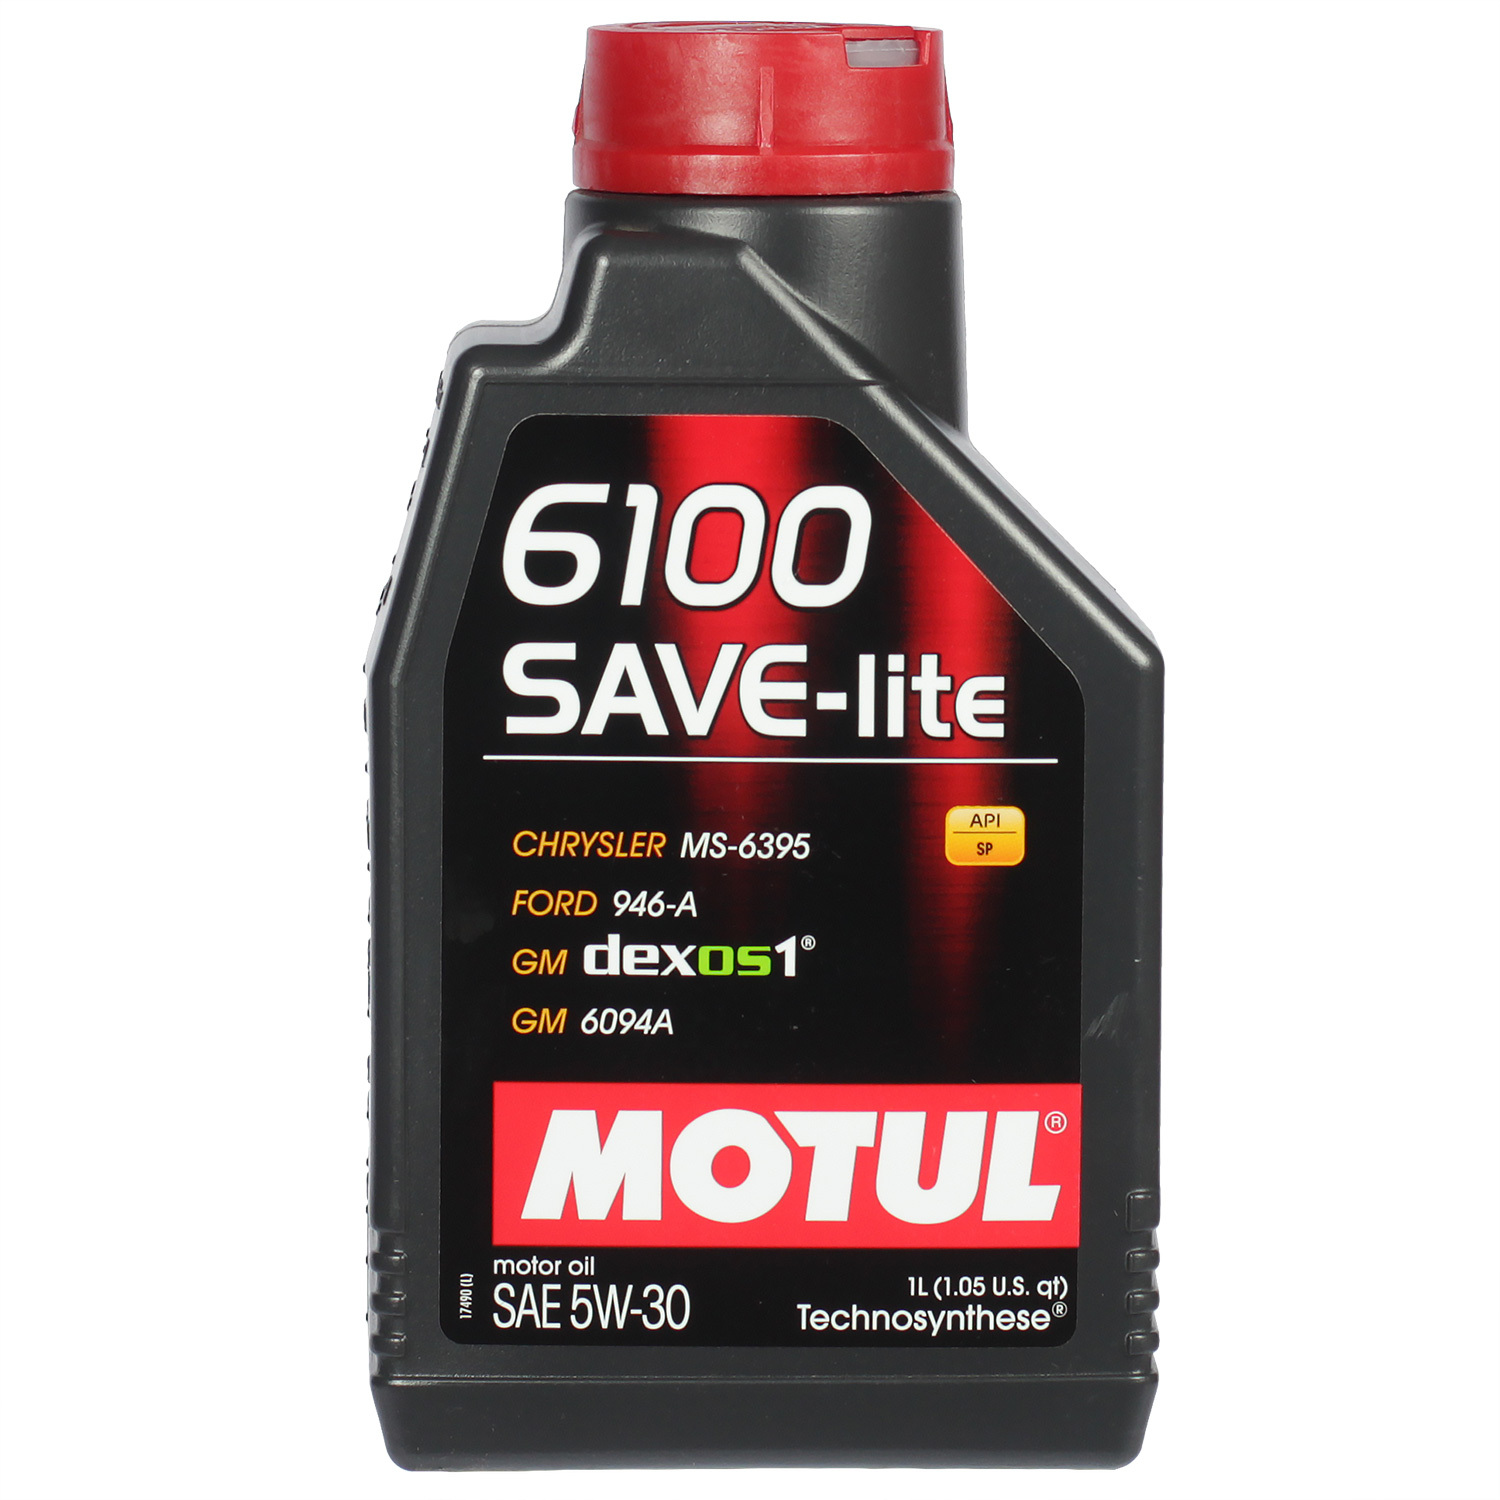 Motul Моторное масло Motul 6100 Save-lite 5W-30, 1 л